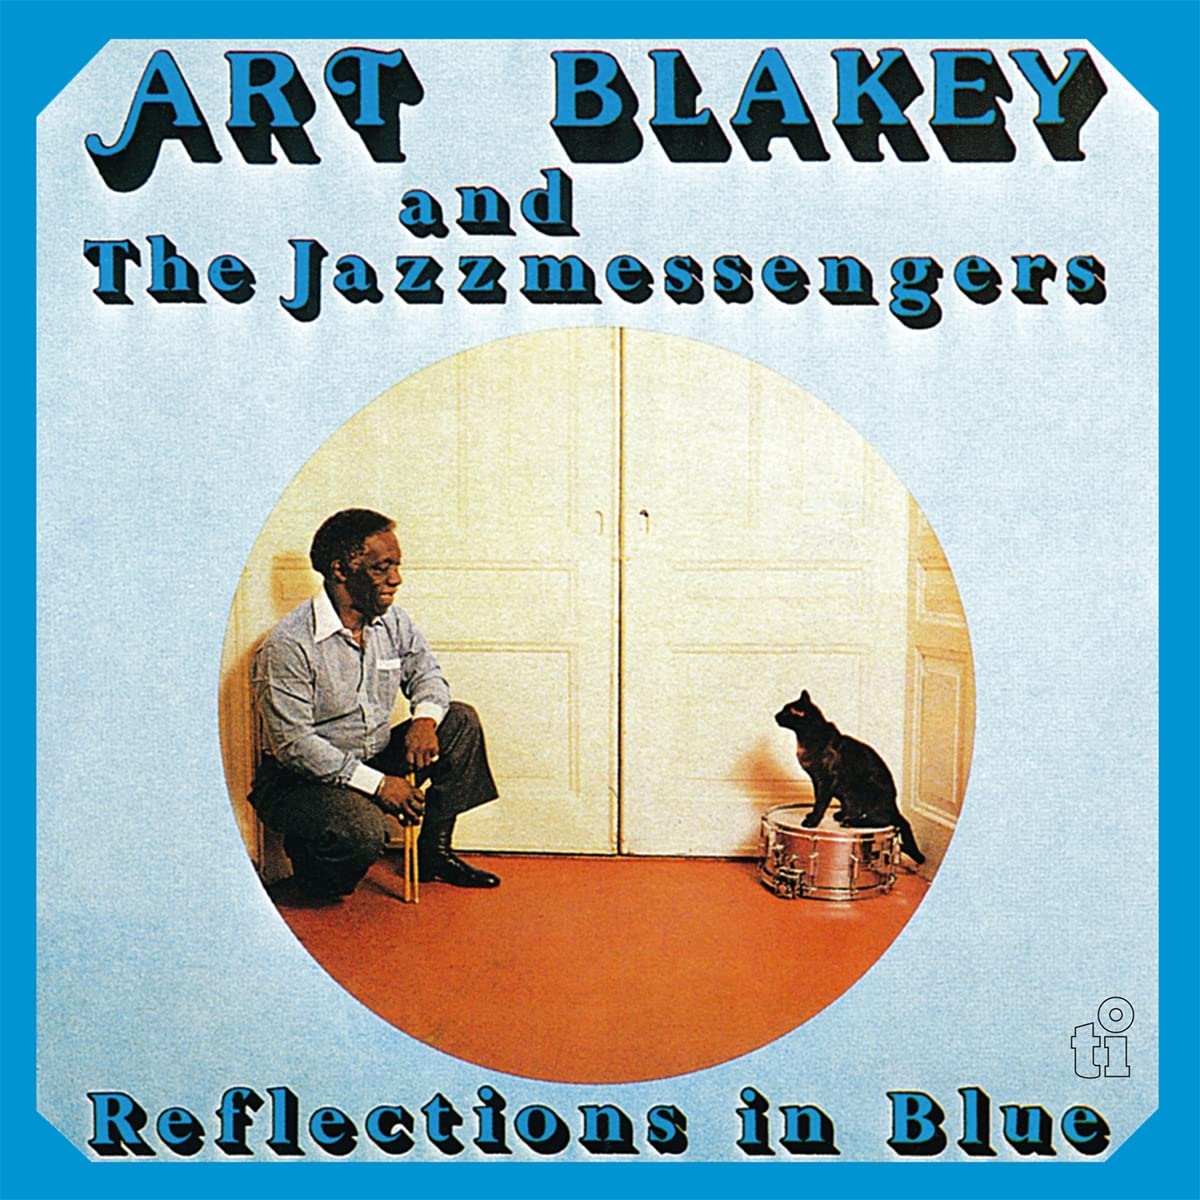 Джаз Music On Vinyl Art Blakey And The Jazzmessengers - Reflections In Blue (Coloured Vinyl LP) поп sony music wham singles echoes from the edge of heaven blue vinyl lp